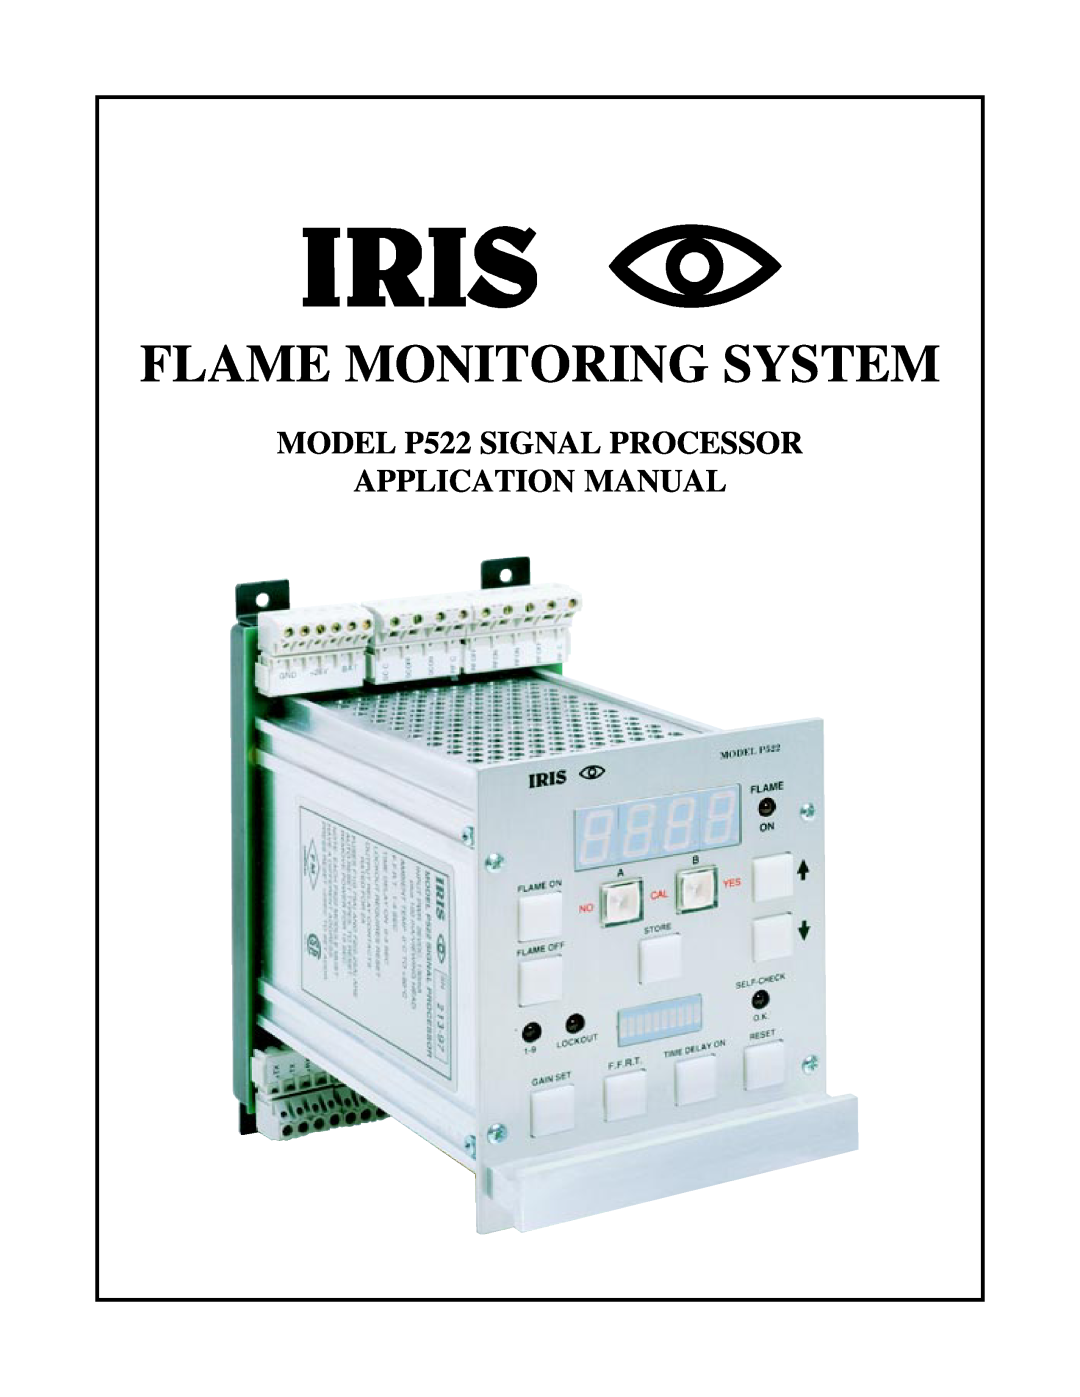 IRIS manual Flame Monitoring System, MODEL P522 SIGNAL PROCESSOR APPLICATION MANUAL 